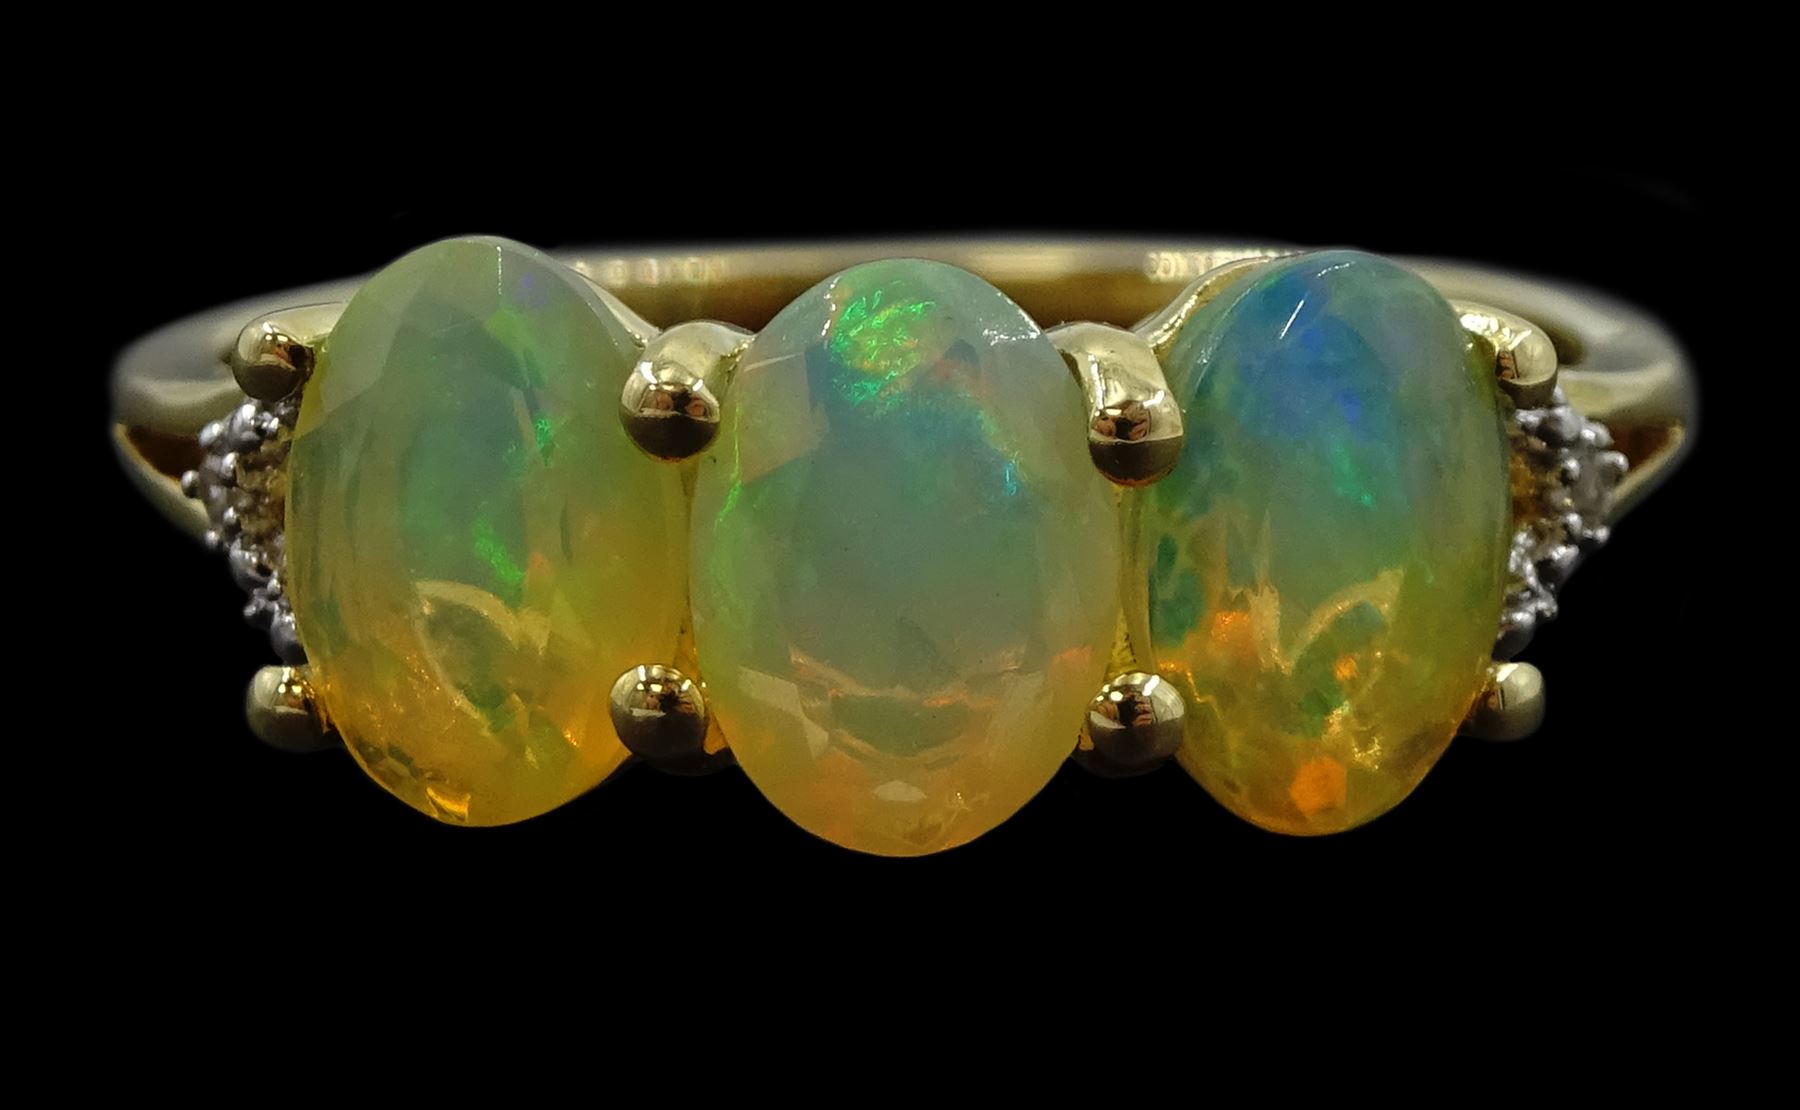 9ct gold three stone opal ring